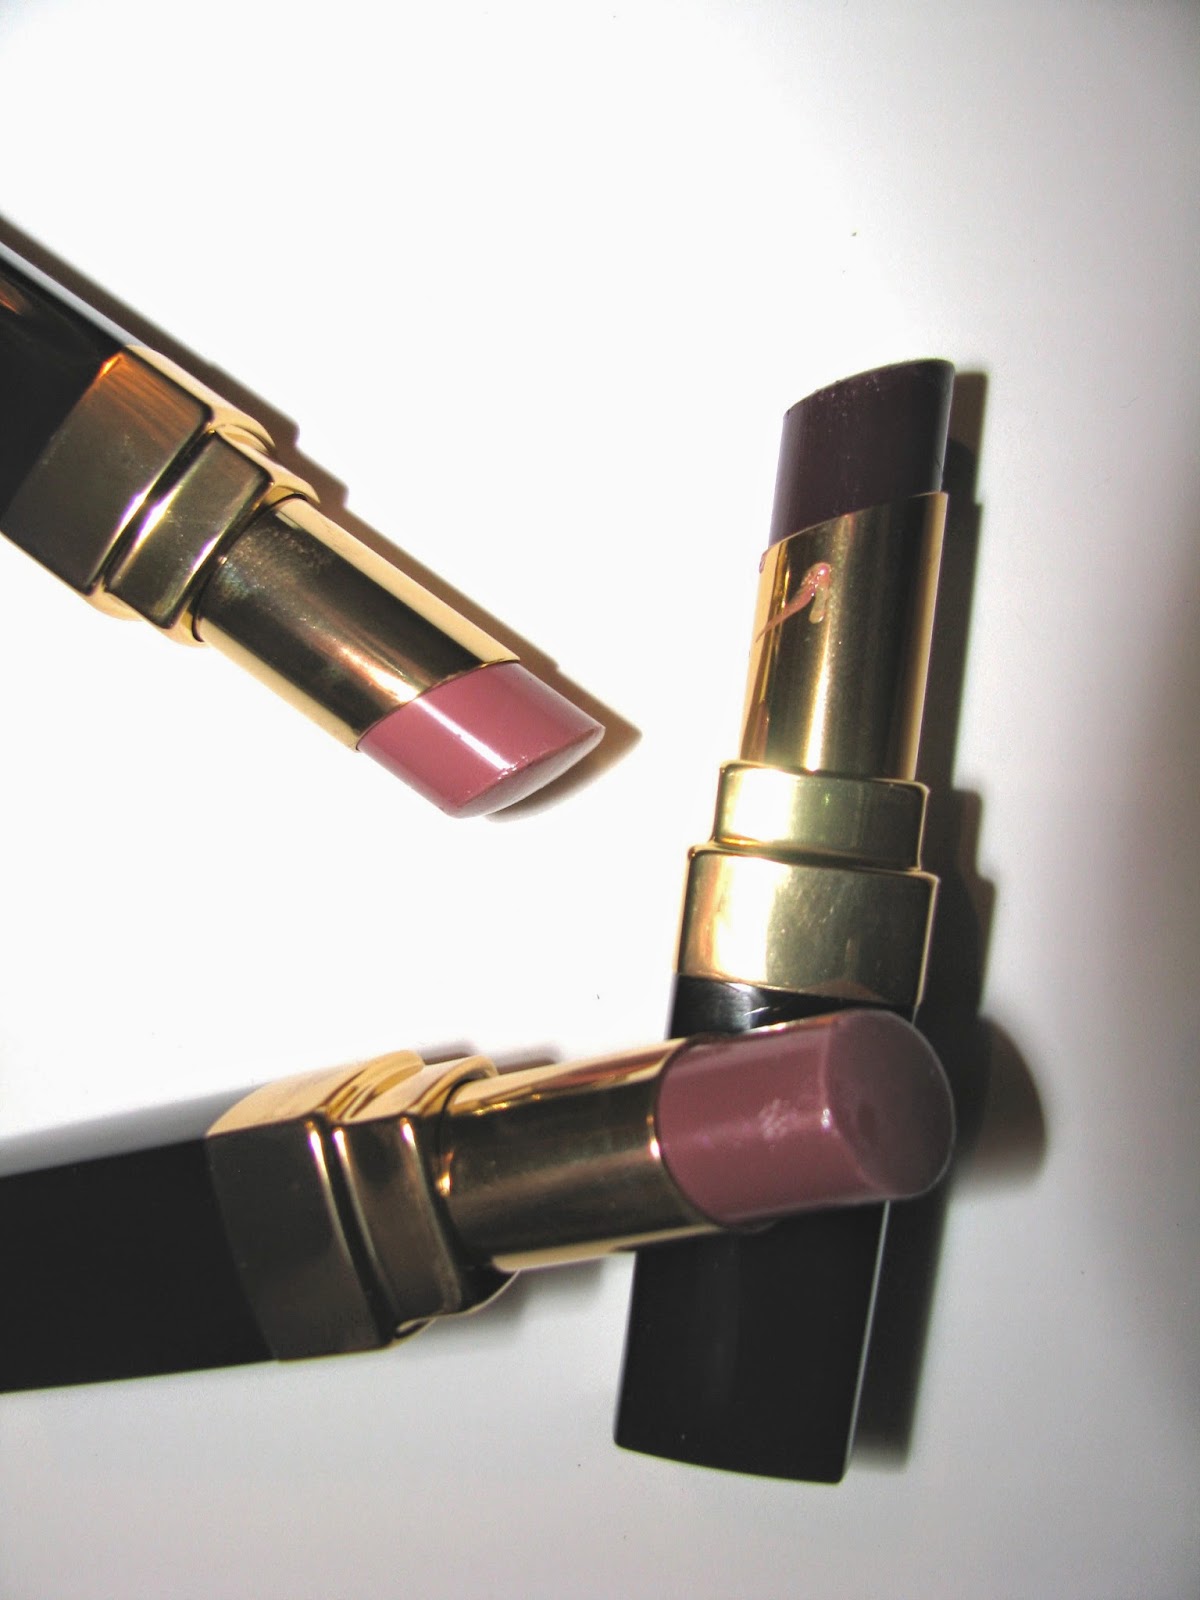 Chanel Rouge Coco Shine Lipstick in Aura